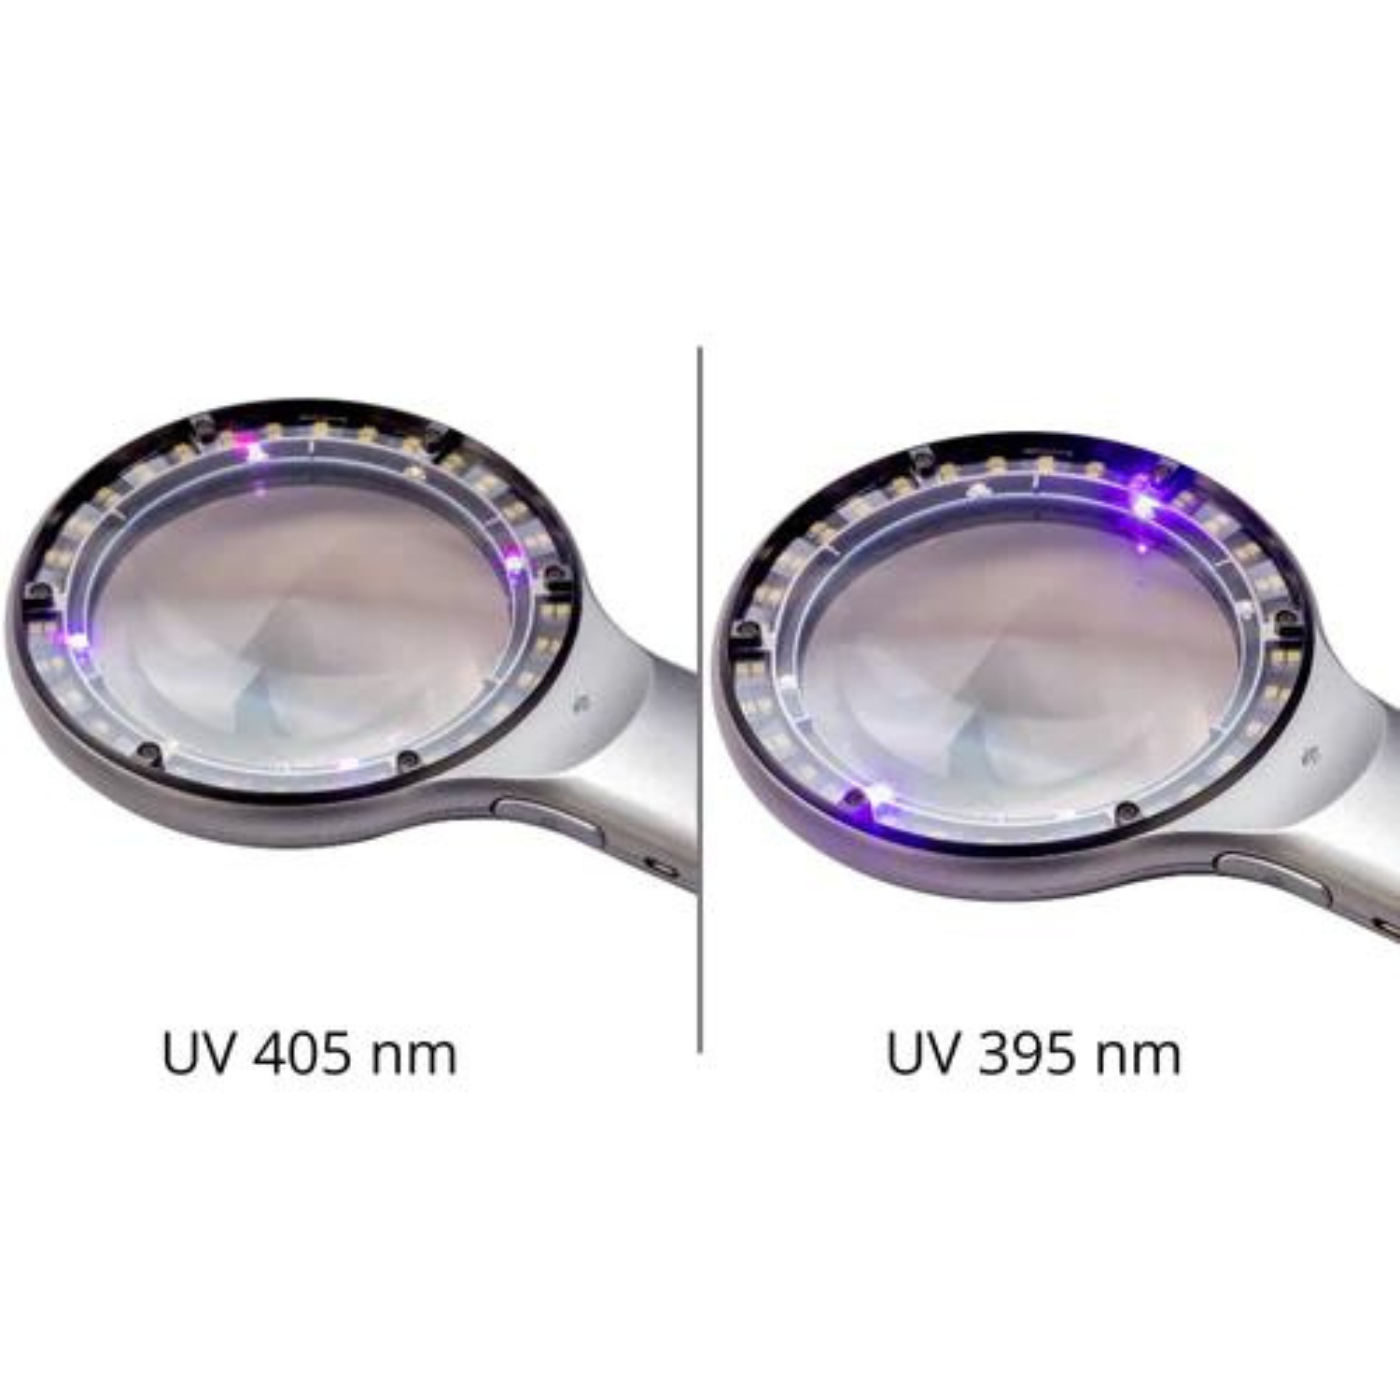 UV modes IDS-3100 woods lamp